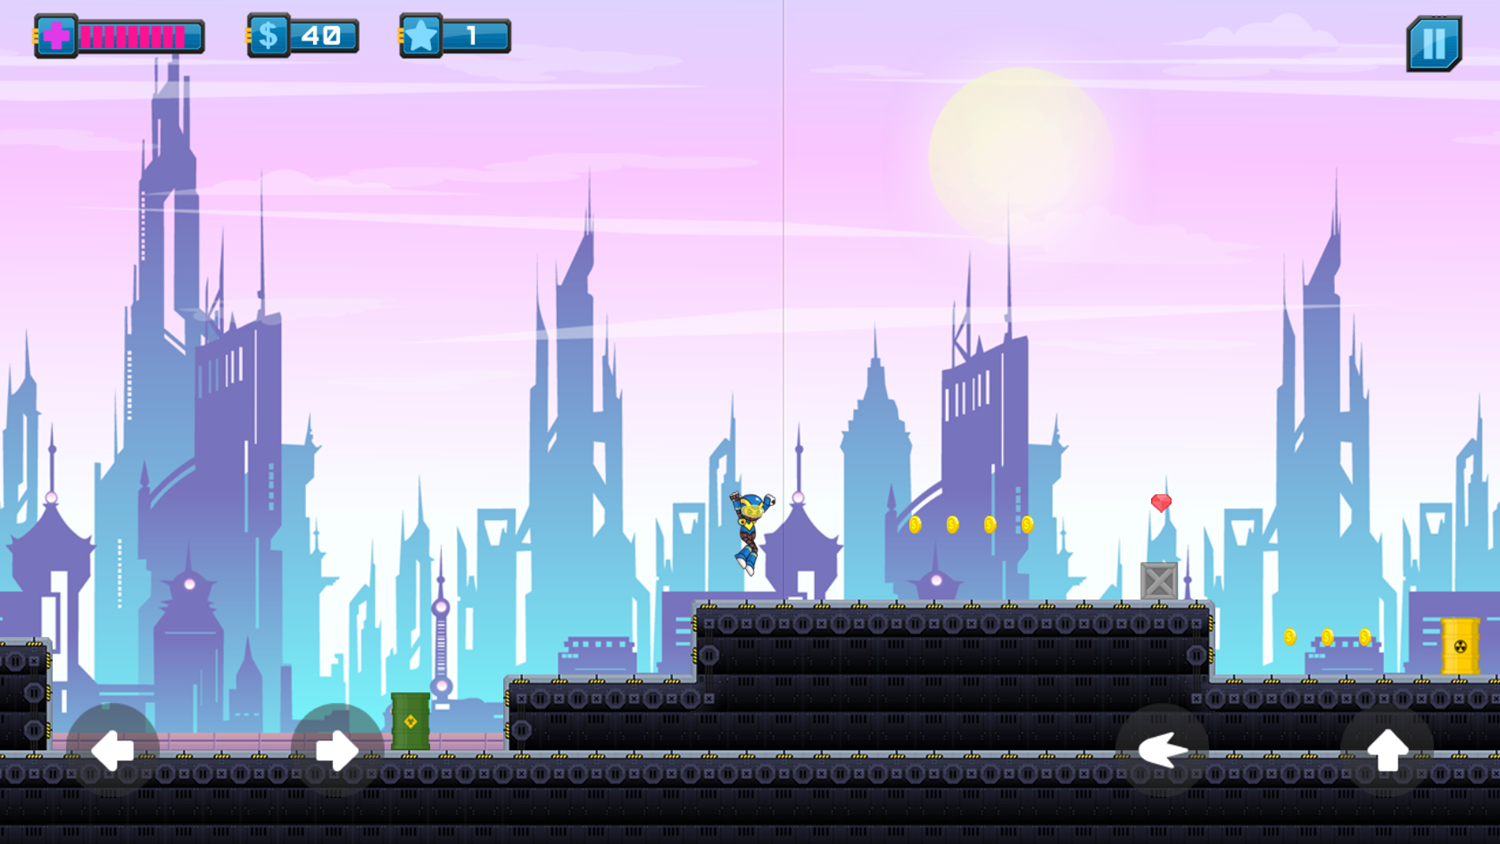 Cyber Knight Slashman Game Platforming Screenshot.